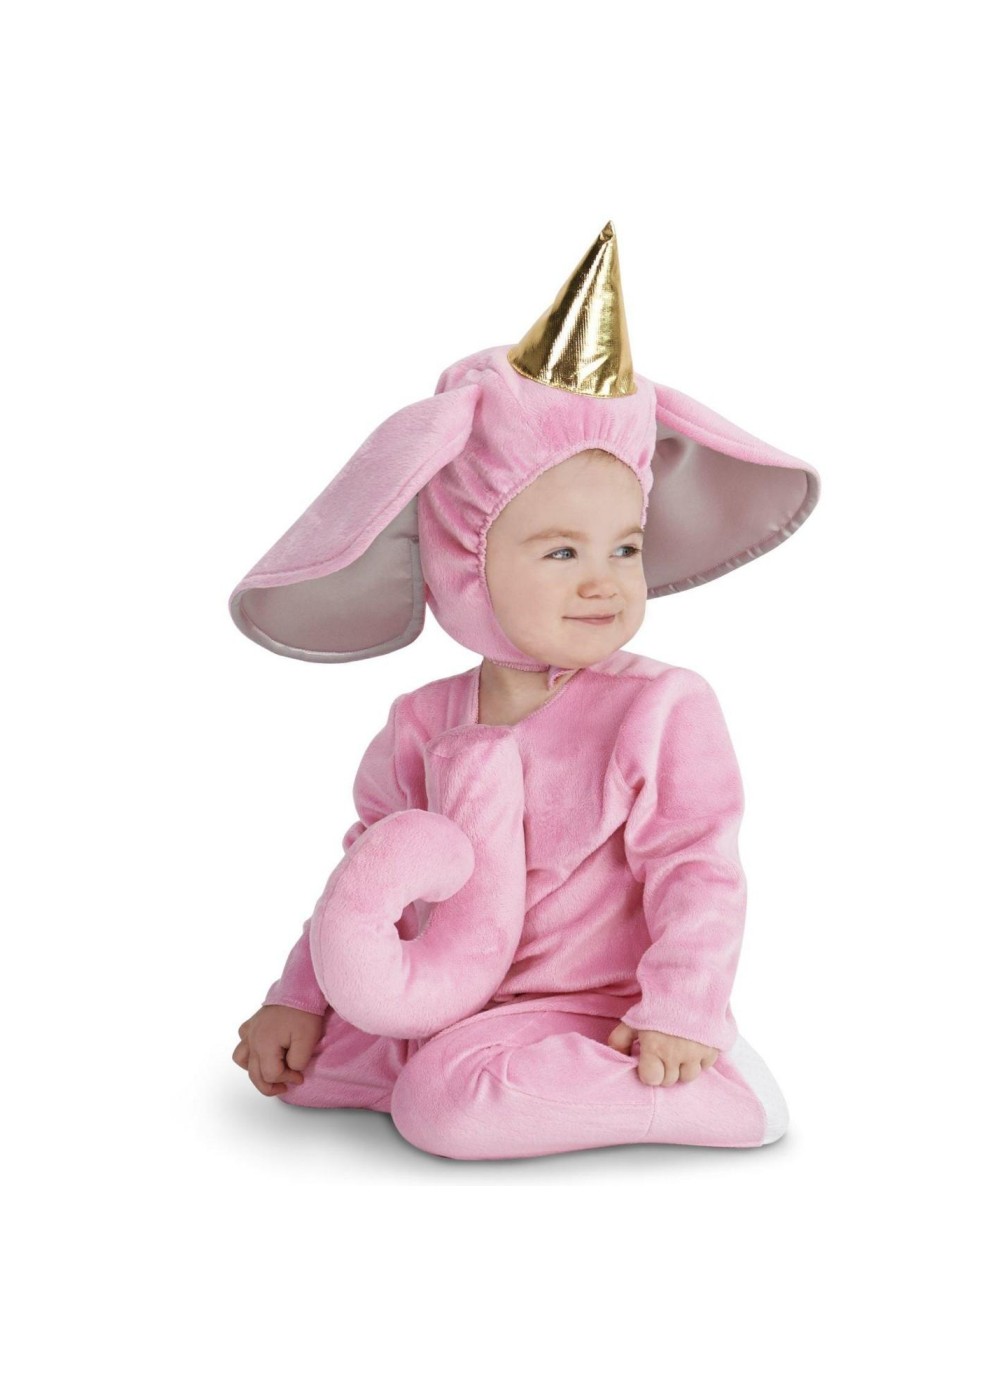 Girls Infant Pink Elephant Costume